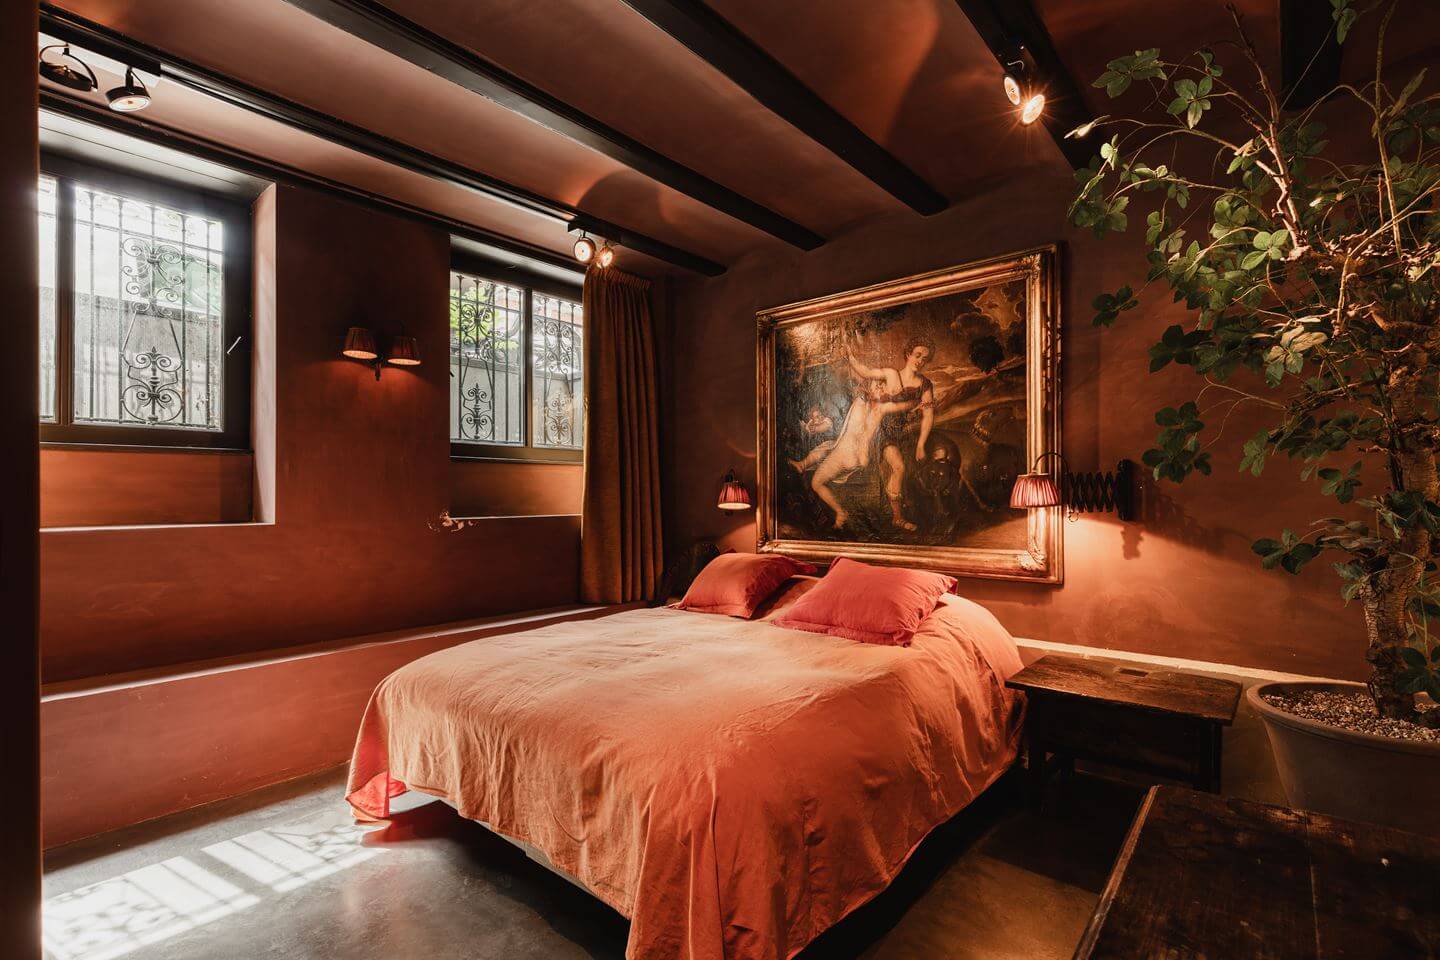 earthy-basement-bedroom-en-suite-bathroom-luxurious-townhouse-amsterdam-nordroom